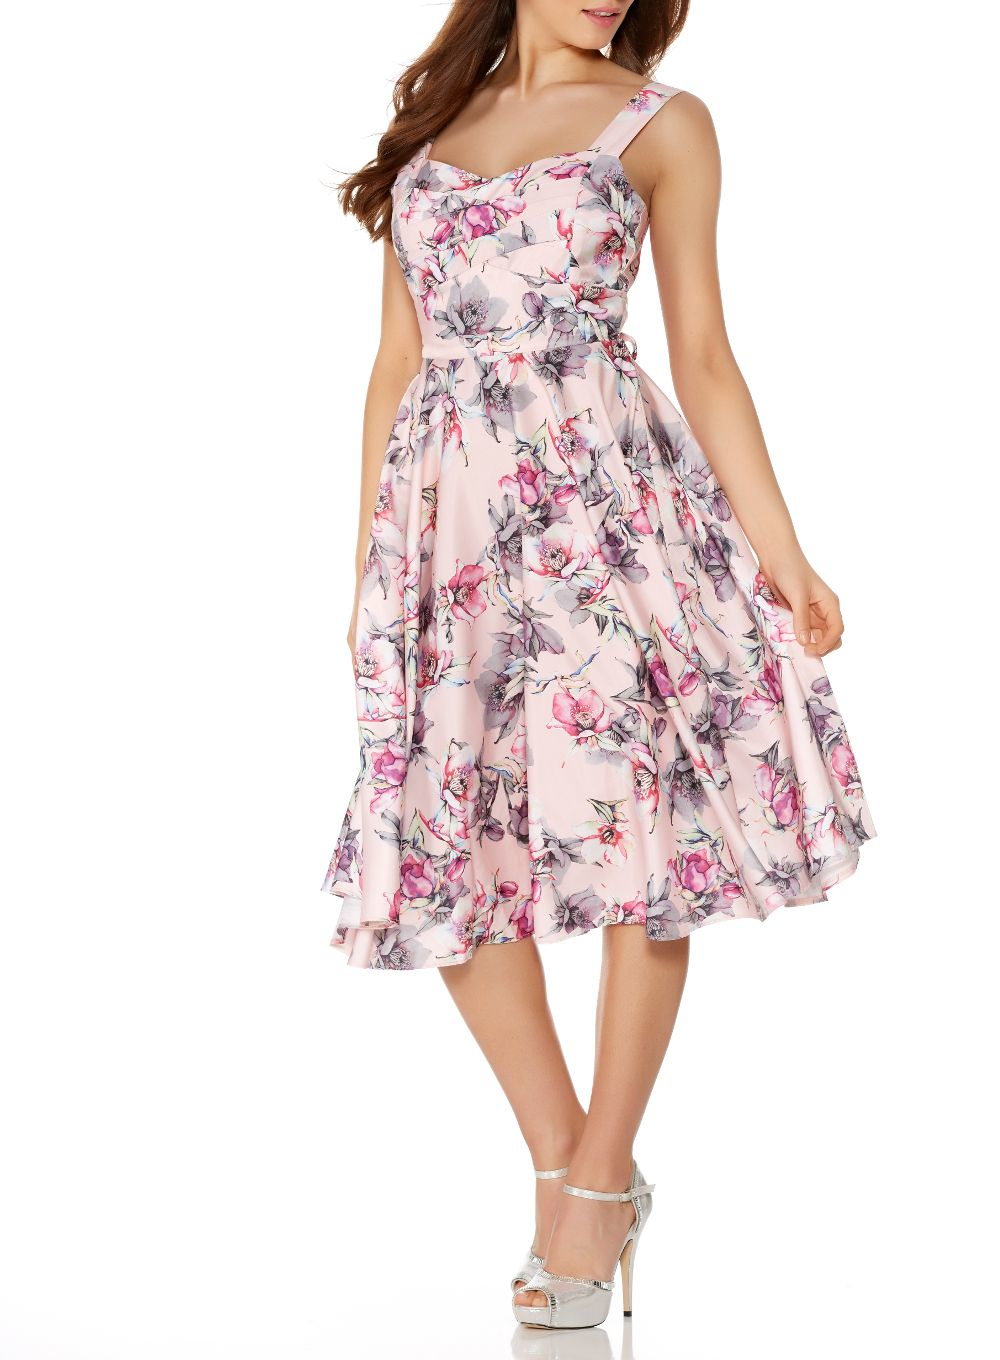  Quiz  Pink  Satin Flower Print Prom  Dress  in Pink  Lyst